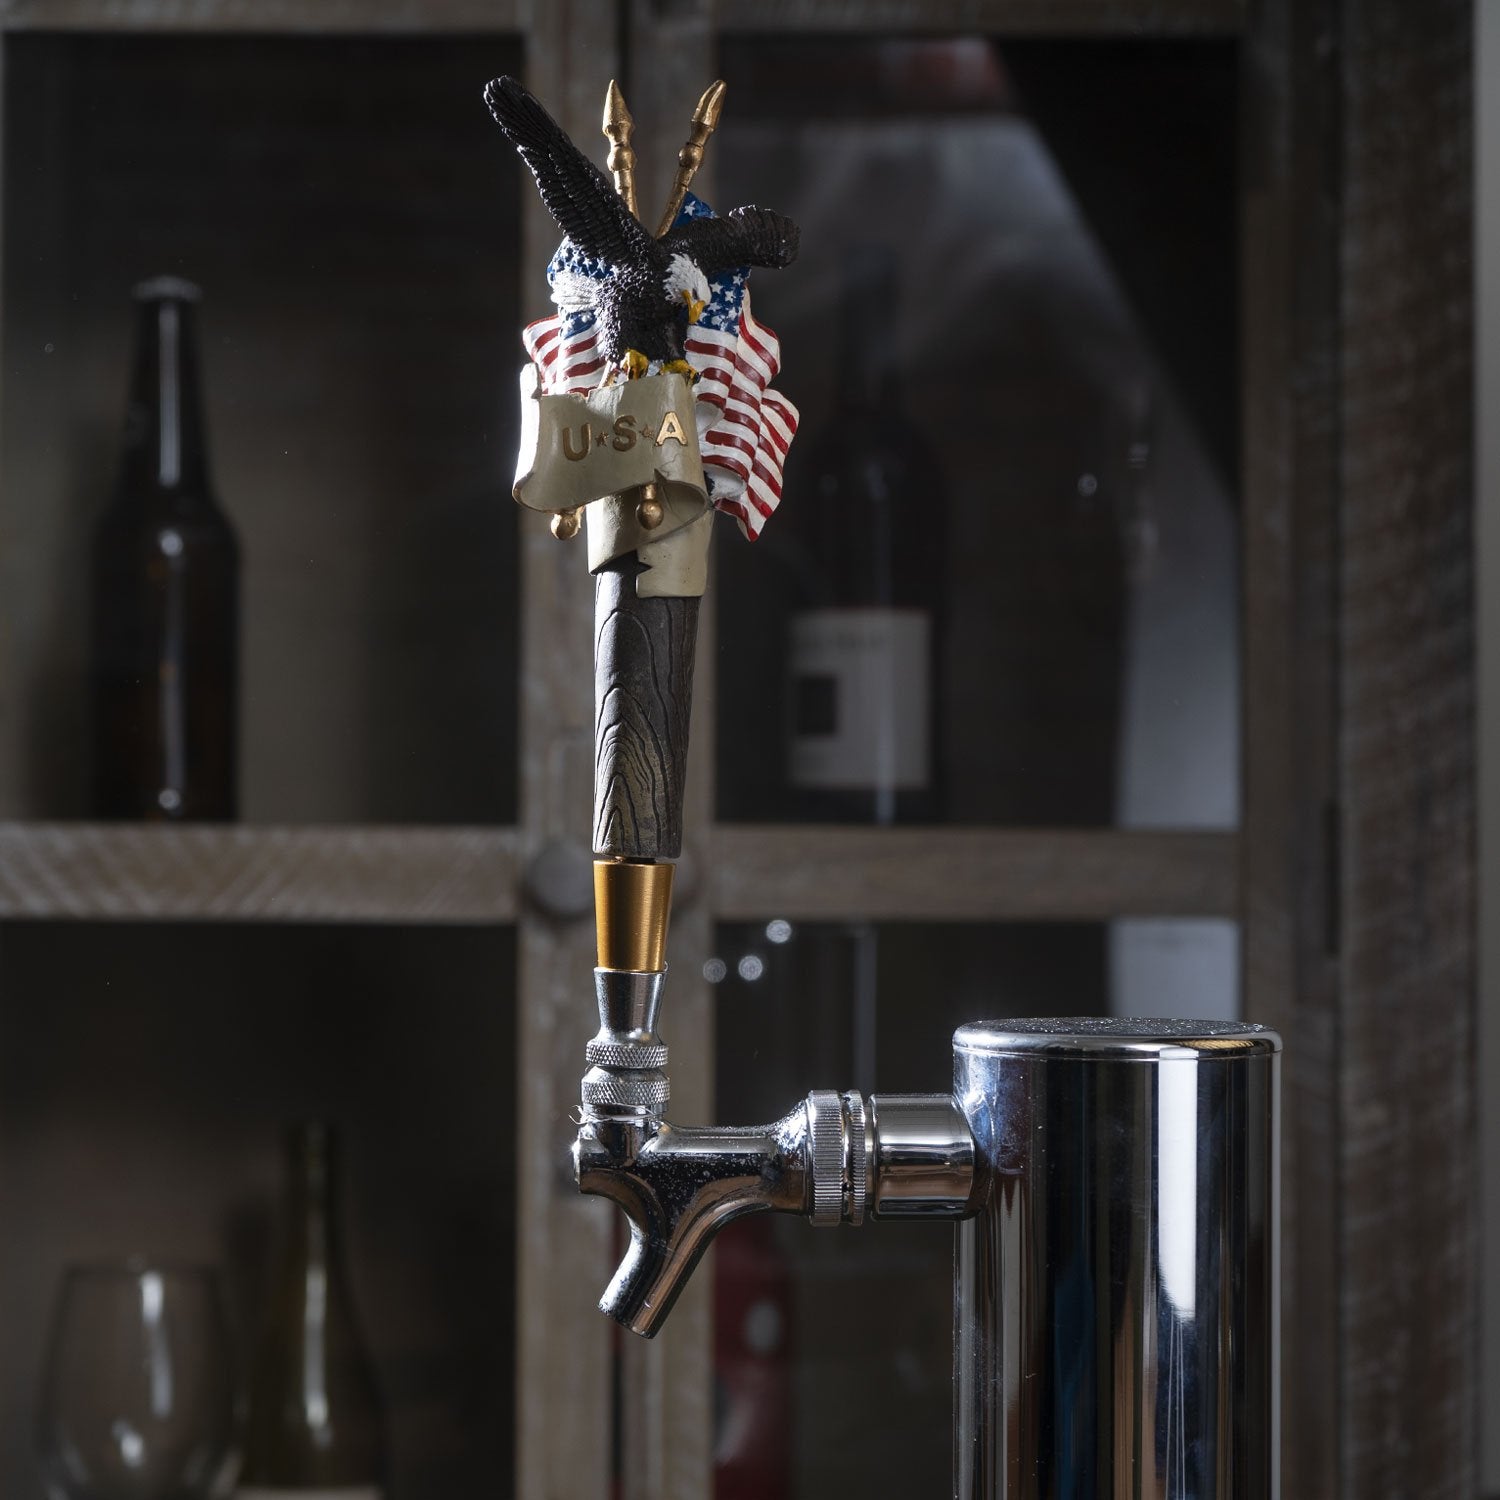 Great American Bald Eagle Figurine Sculpture Beer Tap Pull Handle